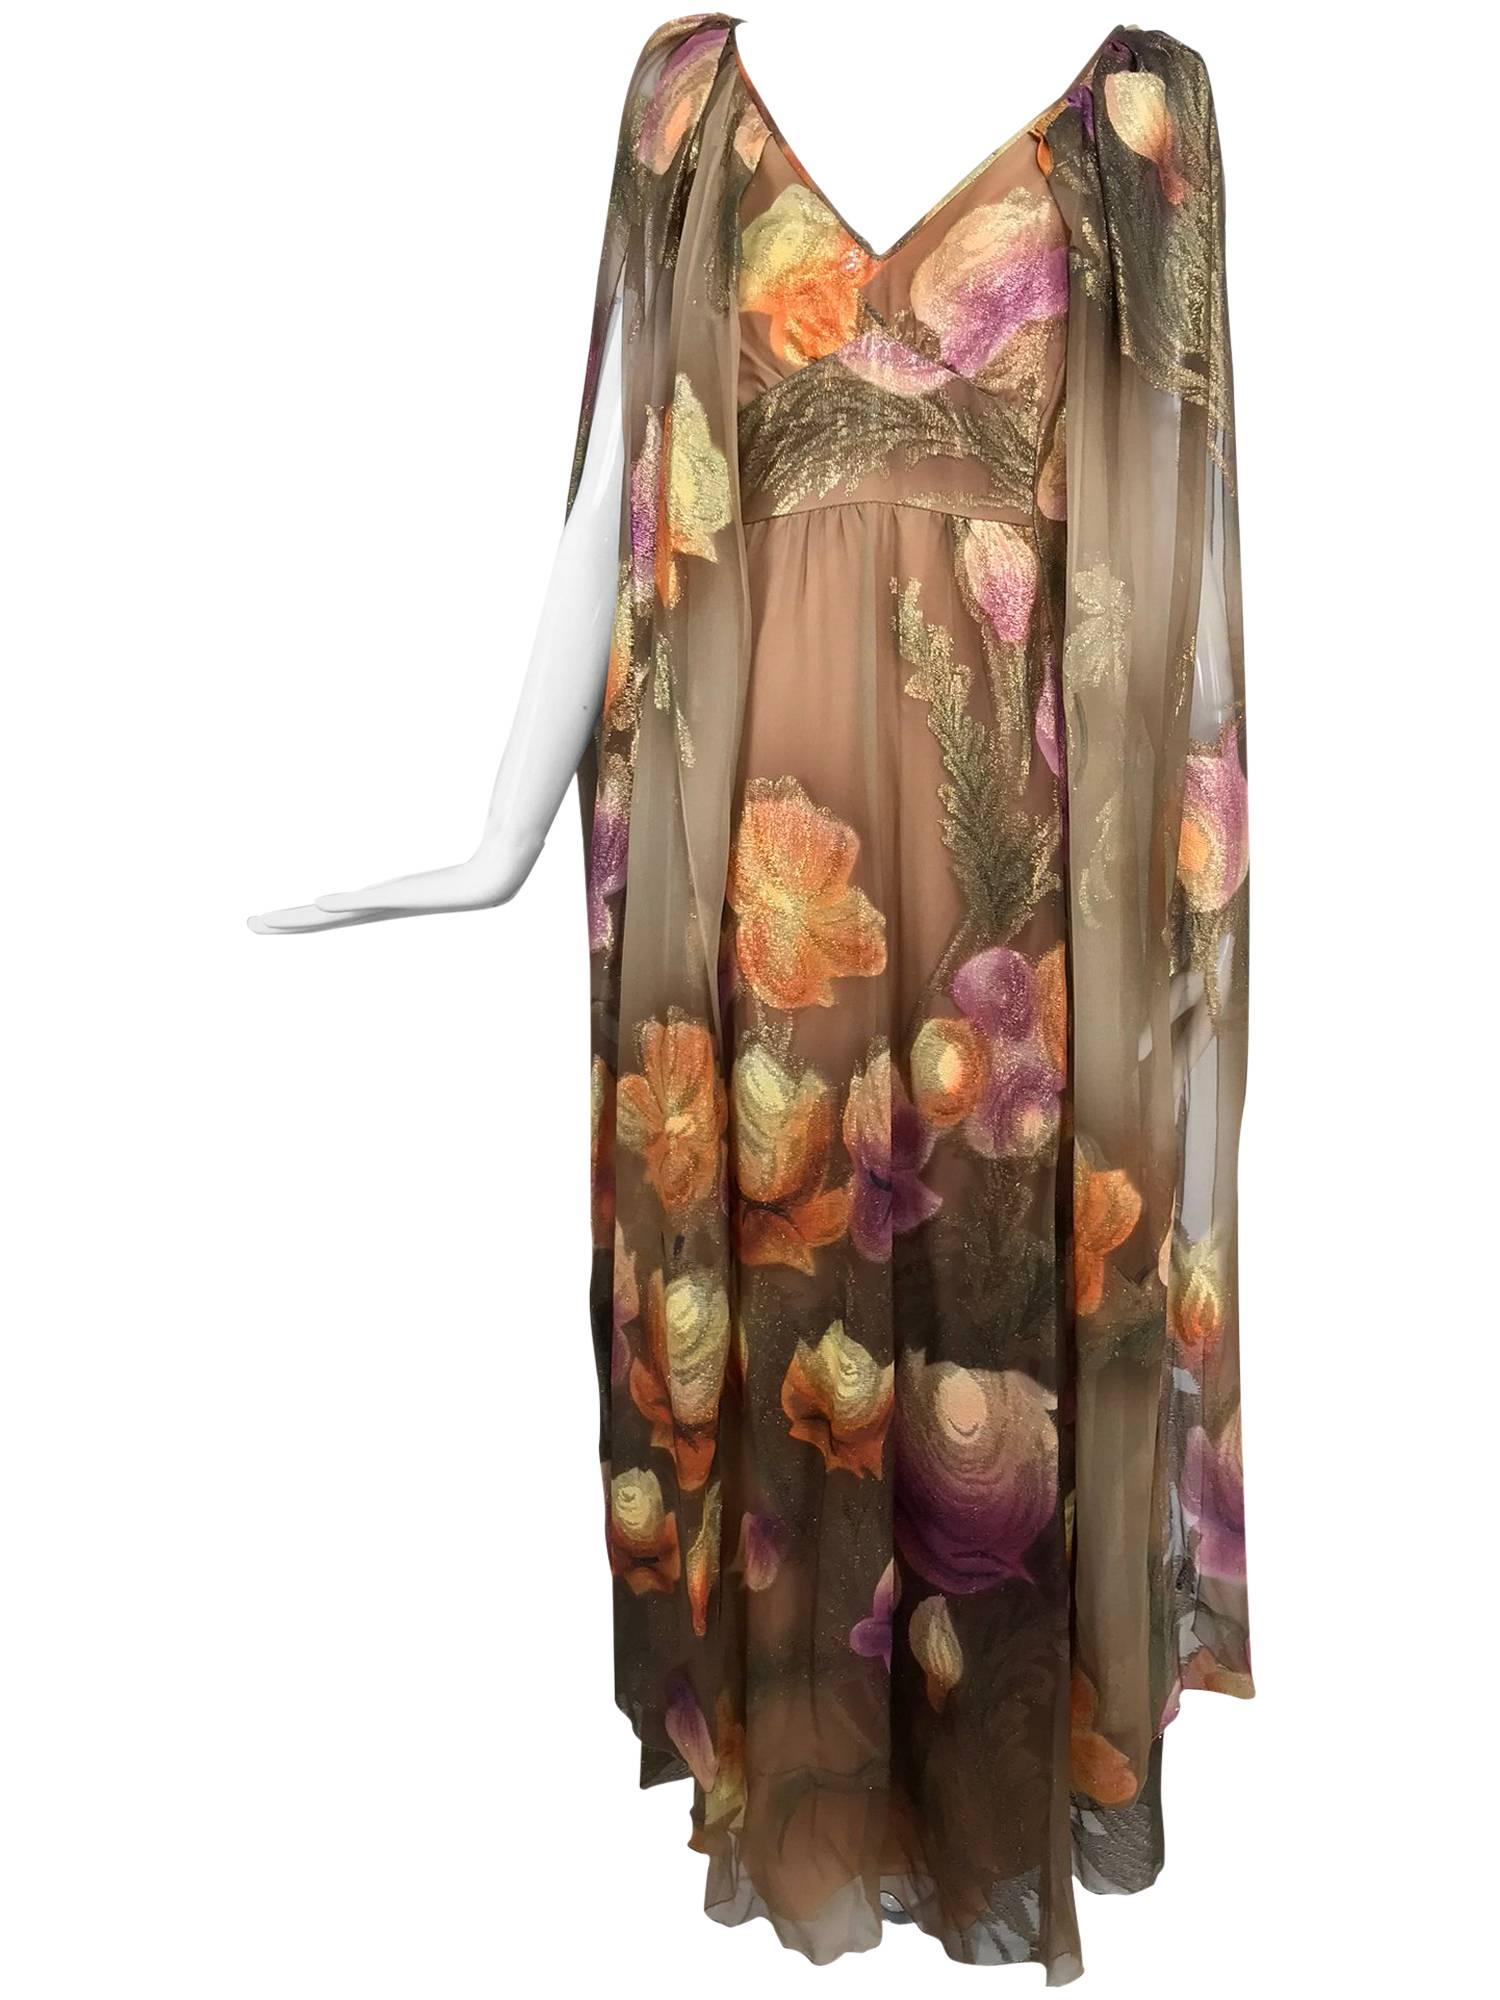 Lilija Nicis hand painted metallic silk chiffon gown, 1960s